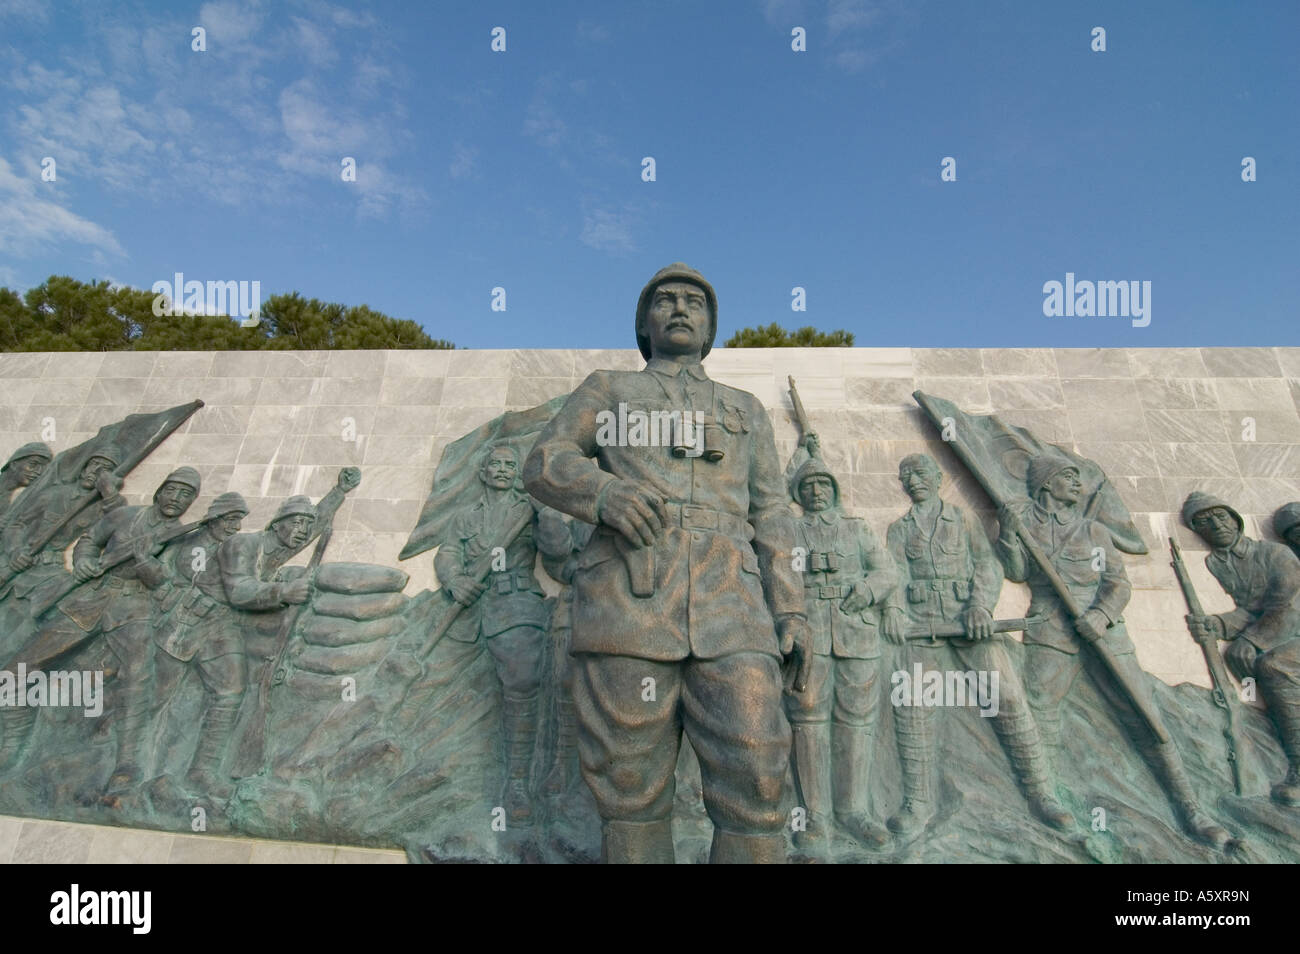 A statue of Mustafa Kemal Ataturk at a Turkish war memorial on the Gallipoli peninsula, Turkey Stock Photo